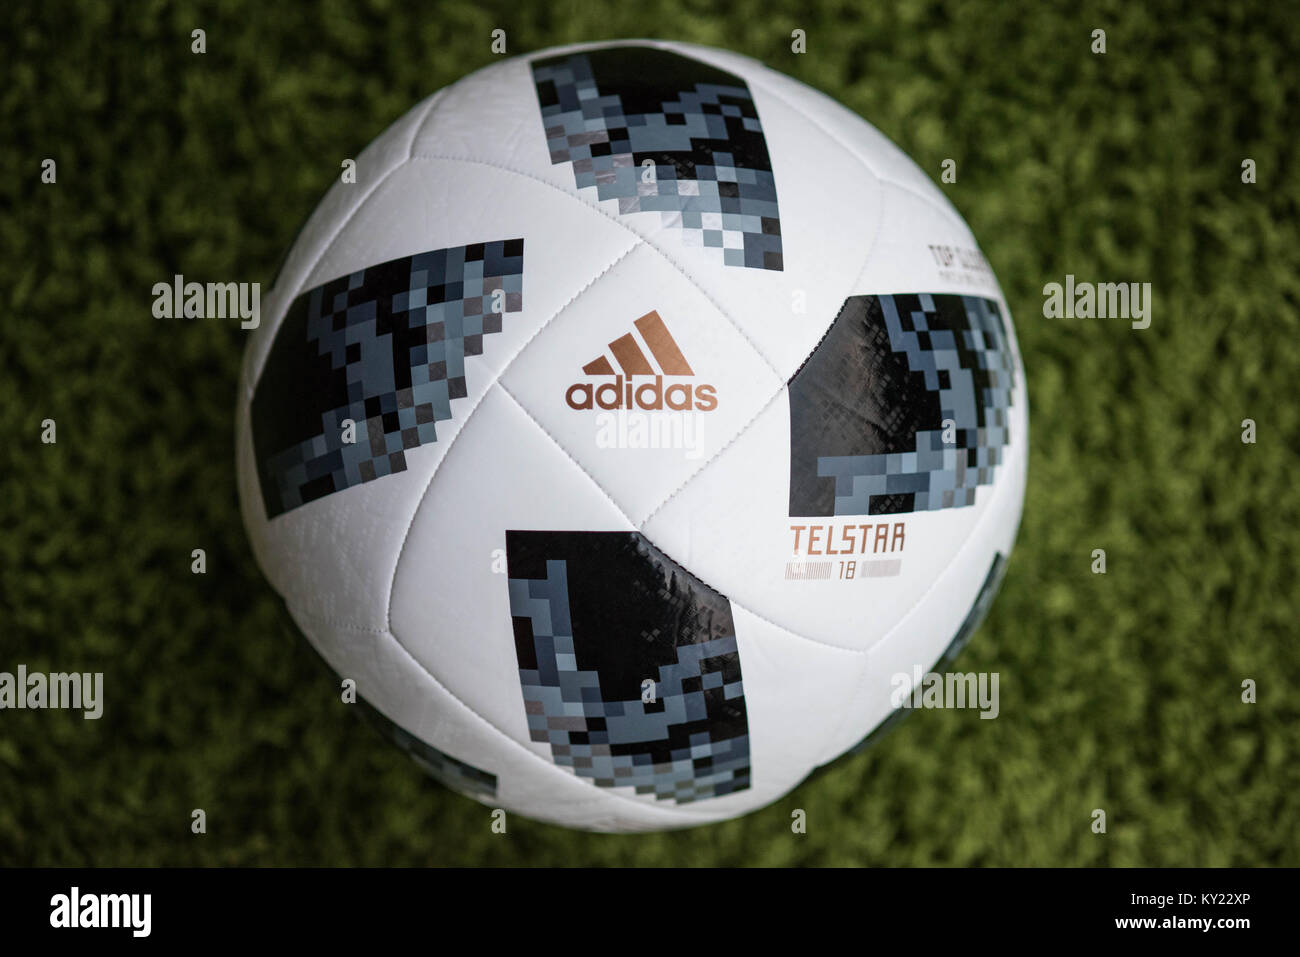 Official Matchball for the FIFA World Cup 2018. Adidas Telstar Football  Stock Photo - Alamy